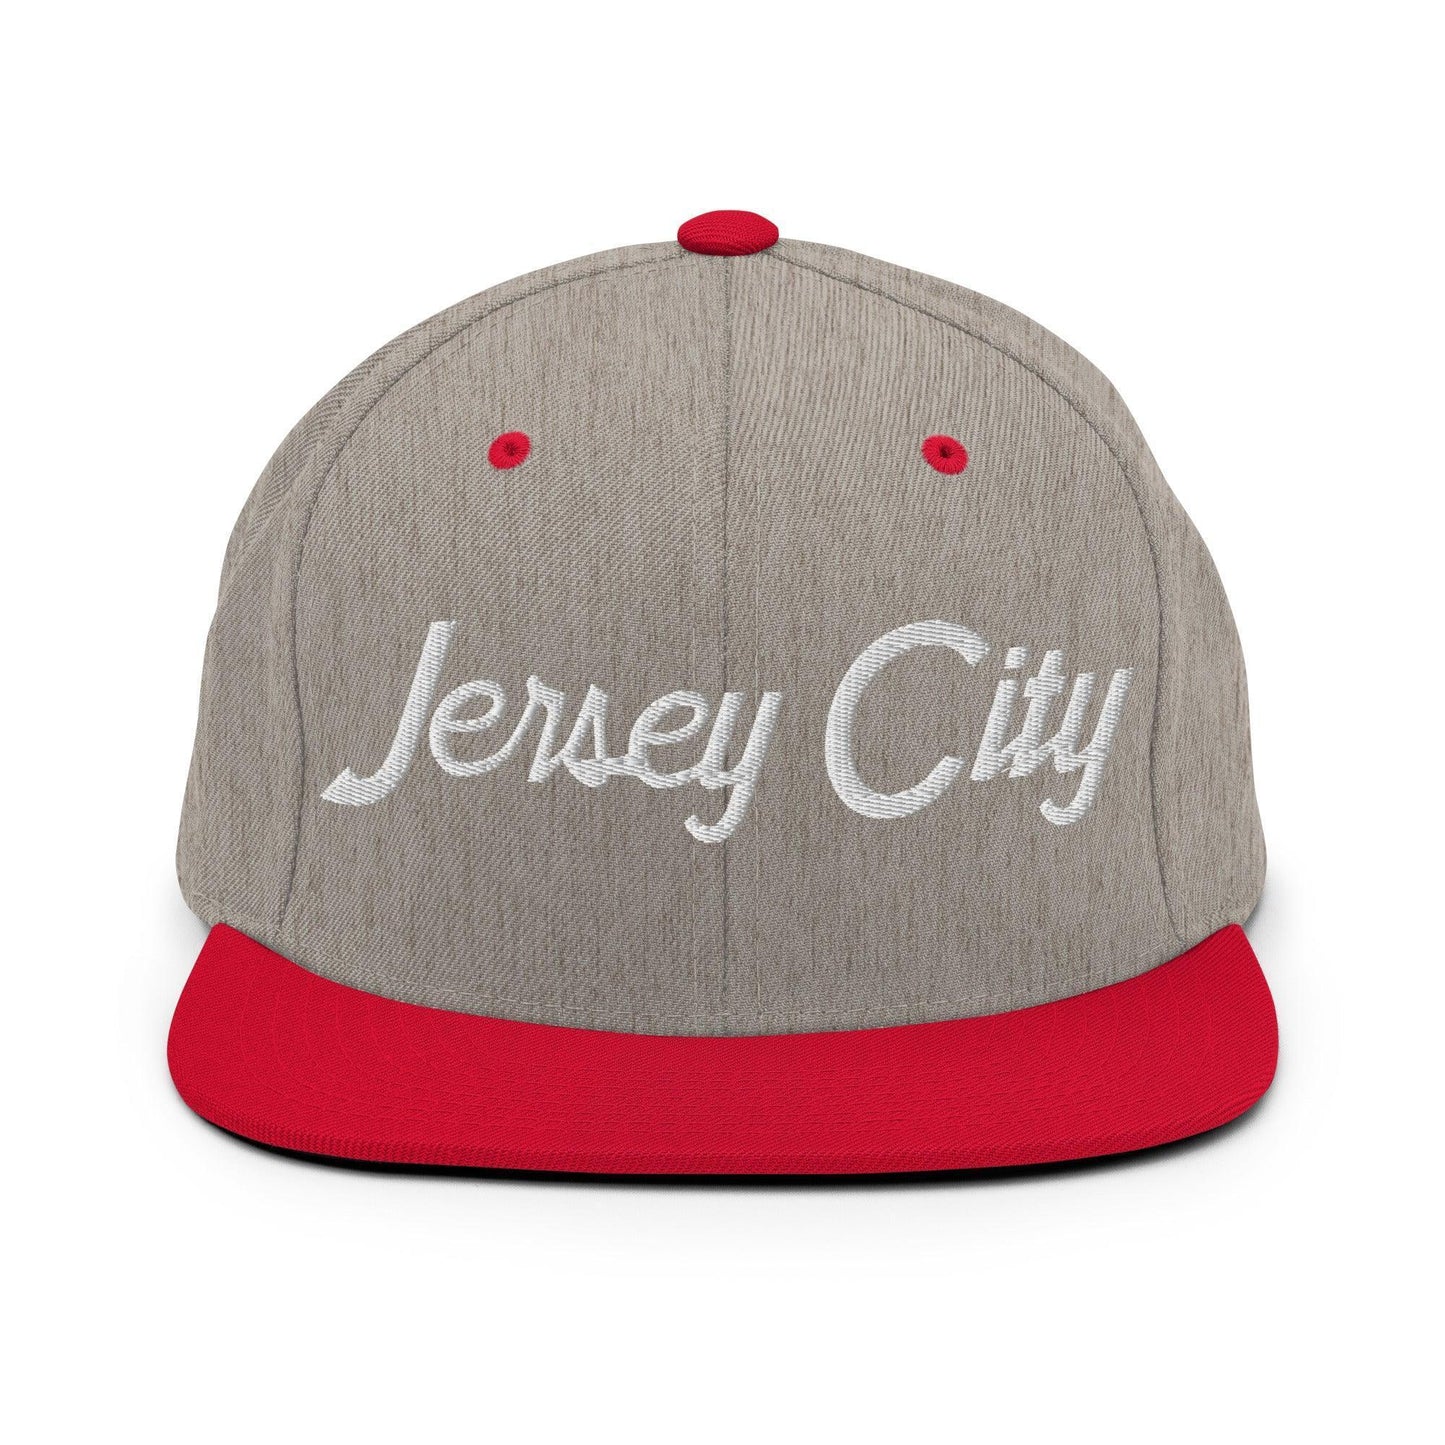 Jersey City Script Snapback Hat Heather Grey/ Red